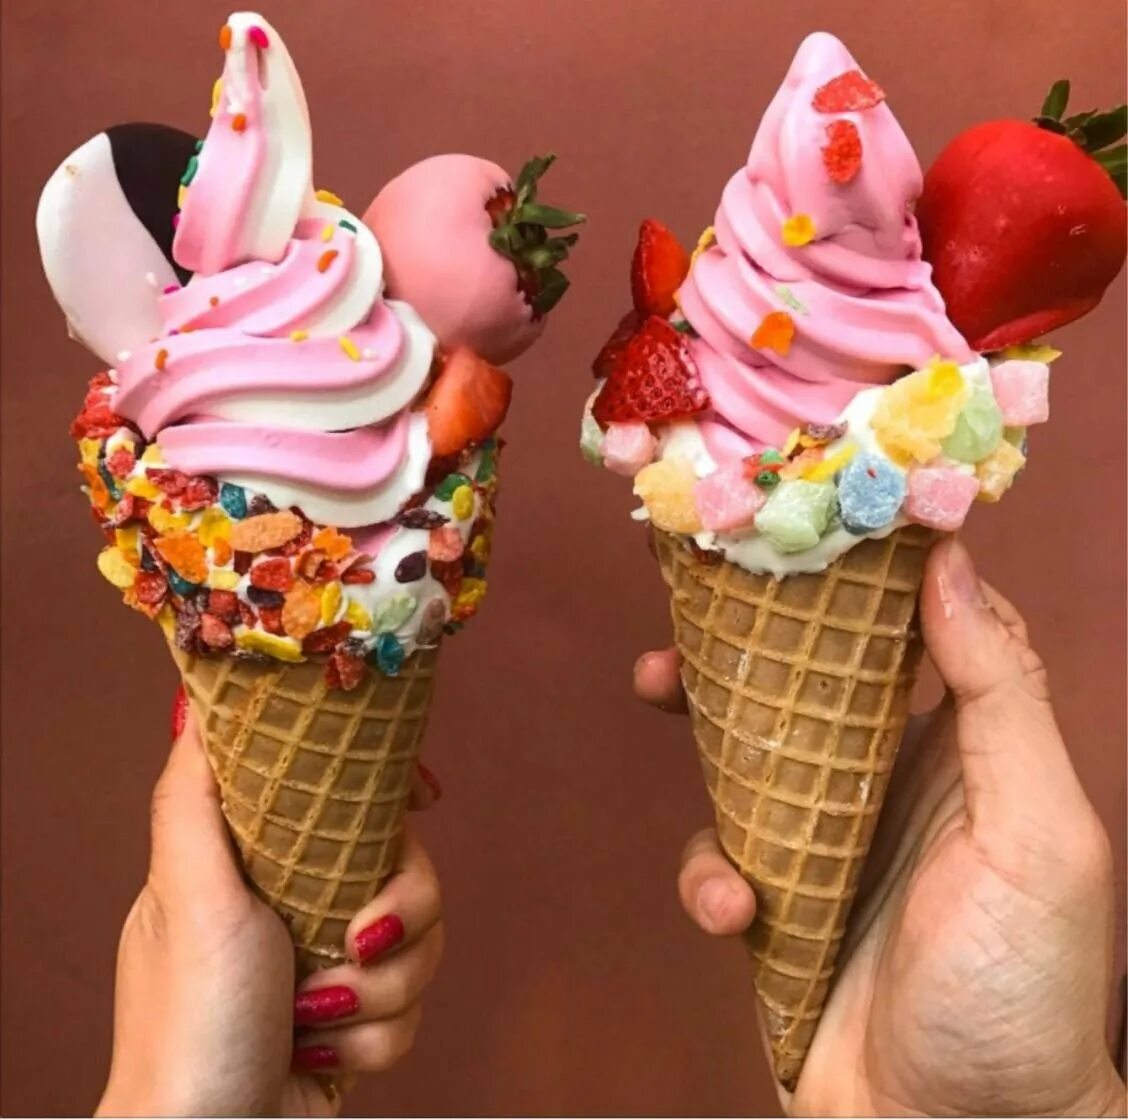 Айс Крим мороженщик. Мороженое рожок. Красивое мороженое. Большой рожок мороженое. Мороженое фото красивое